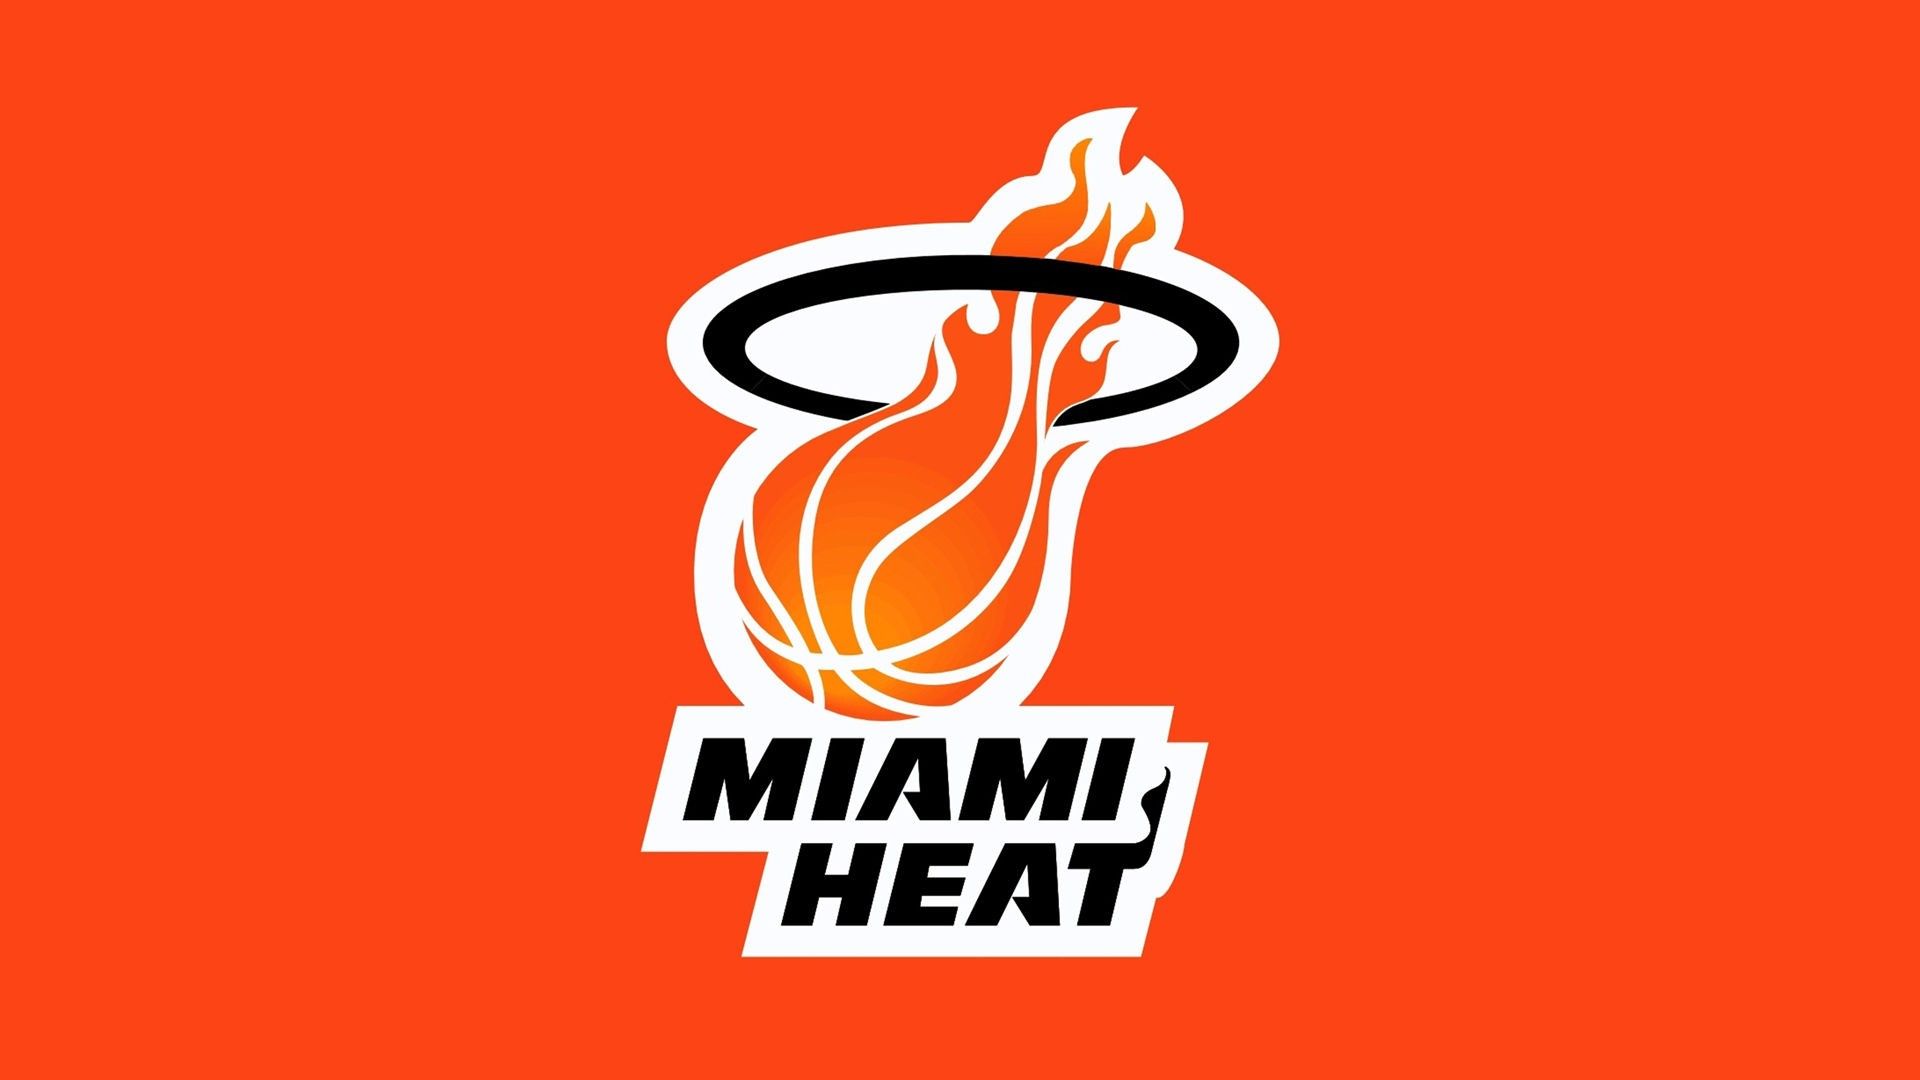 HD Miami Heat Background Basketball Wallpaper. Nba miami heat, Miami heat, Miami heat logo